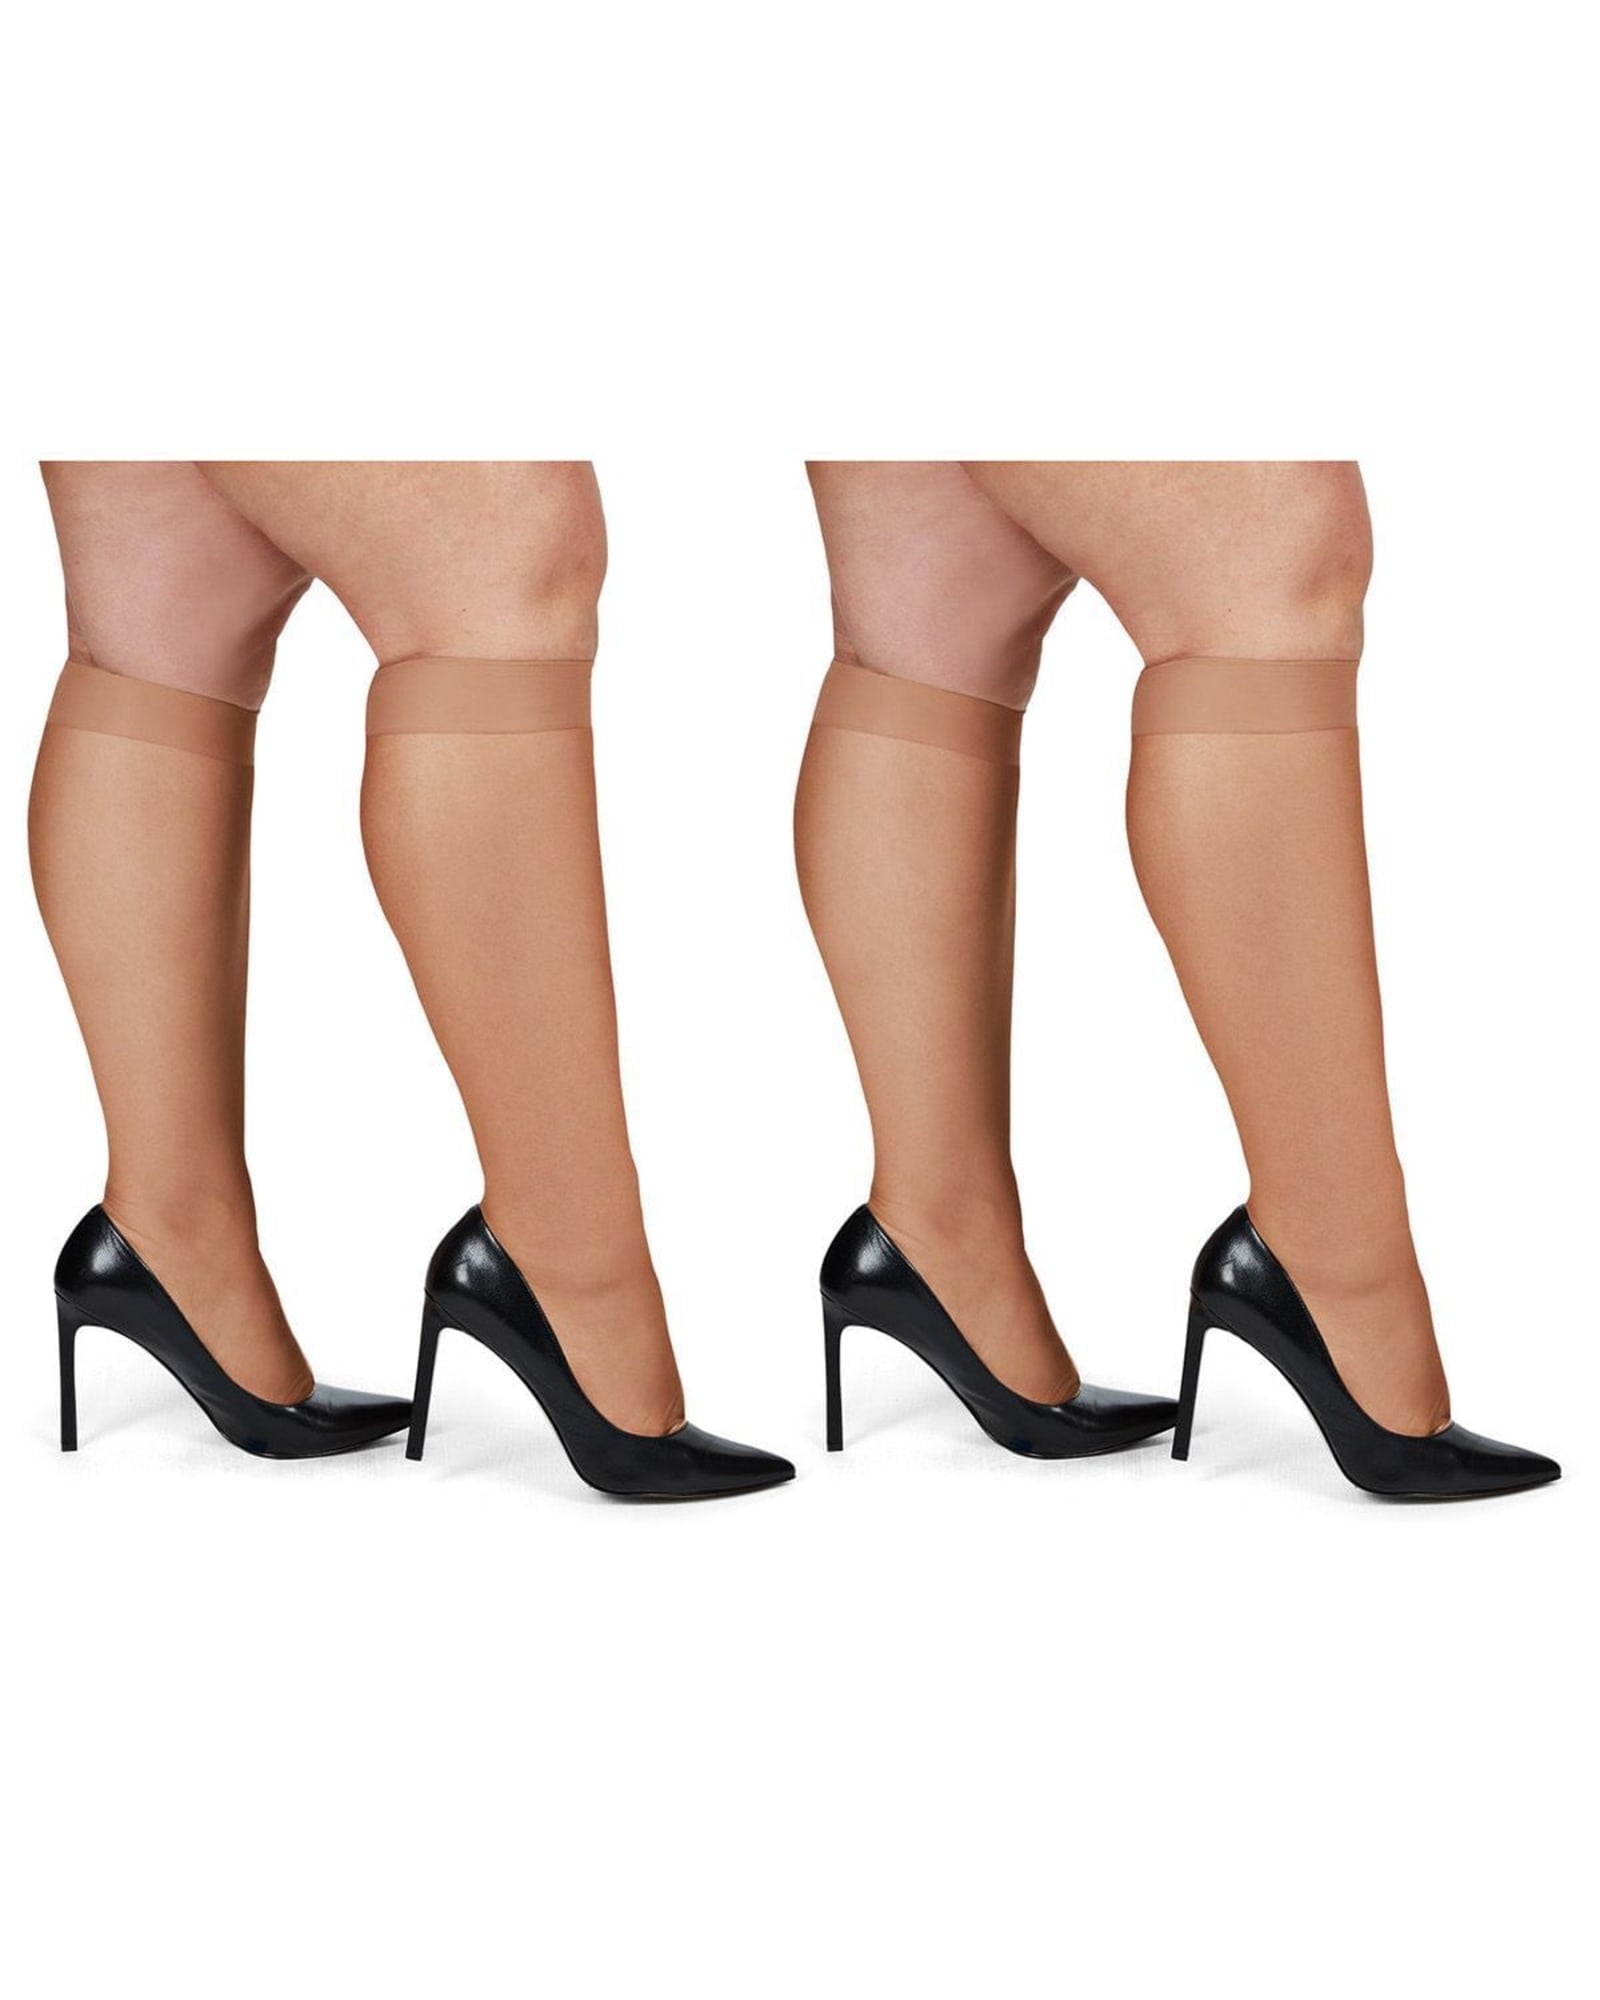 Hanes Womens Curves Opaque Socks 2-Pack, 3X/4X, Black 